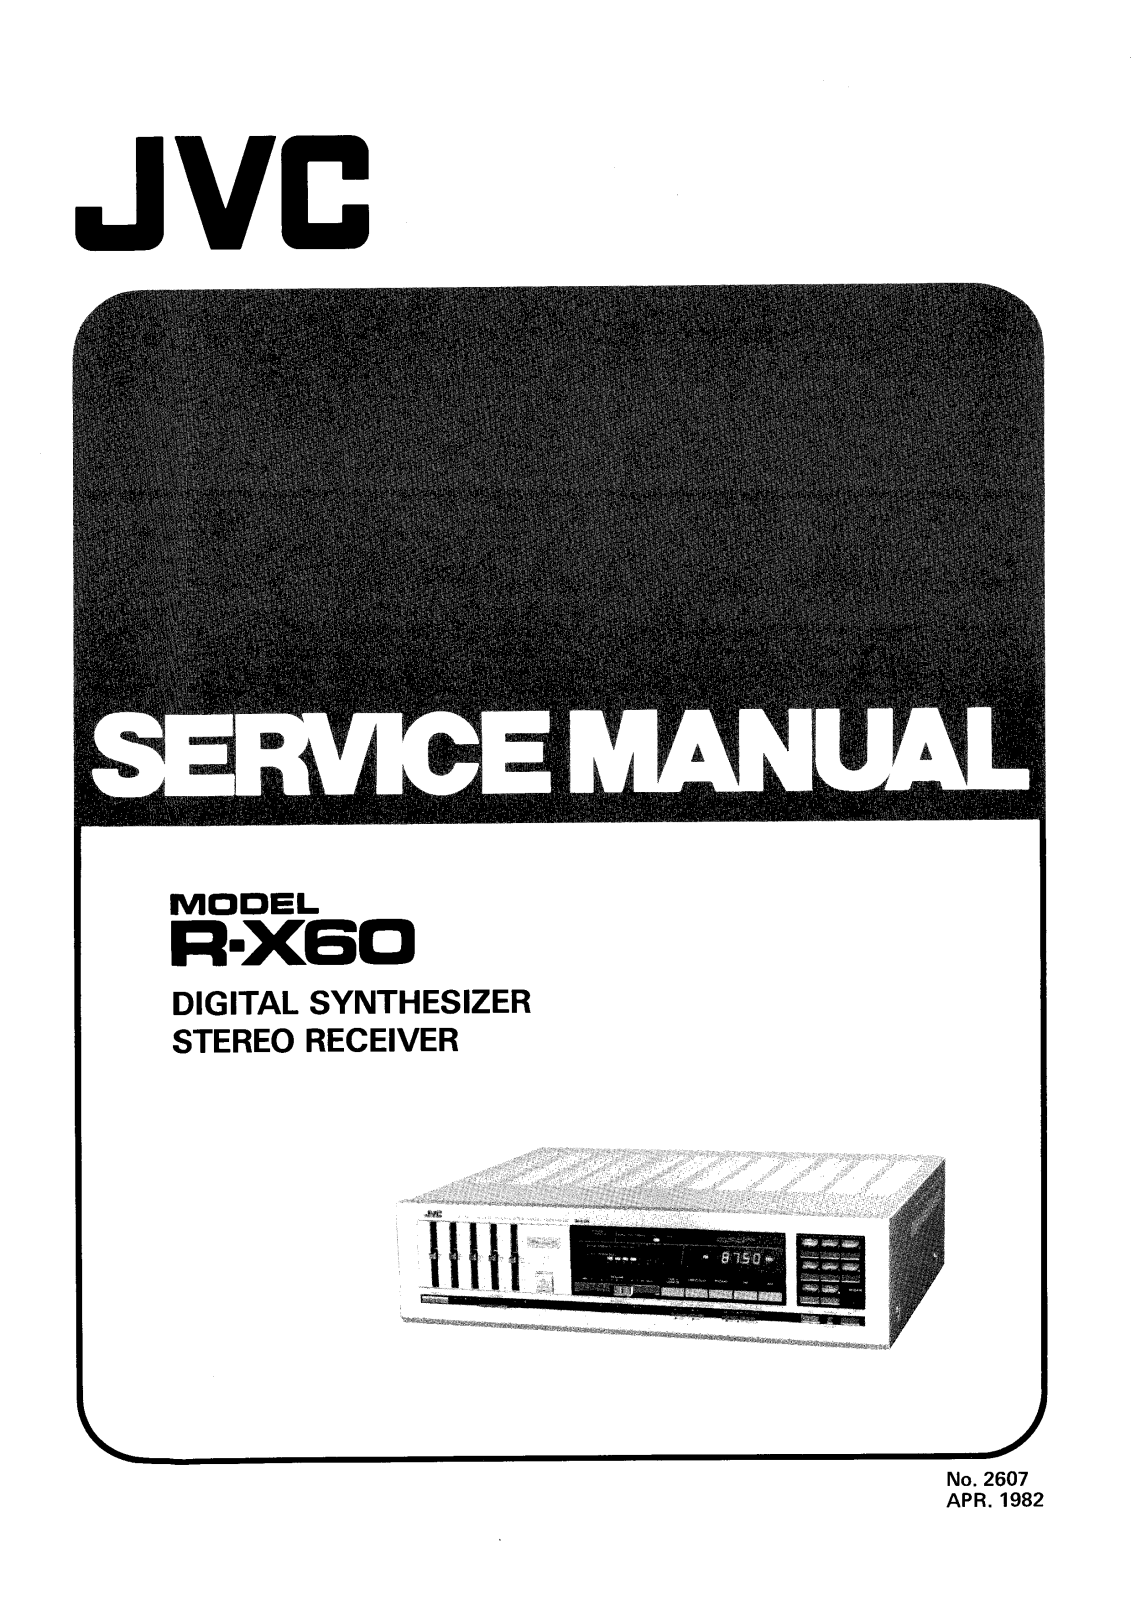 JVC RX-60 Service manual